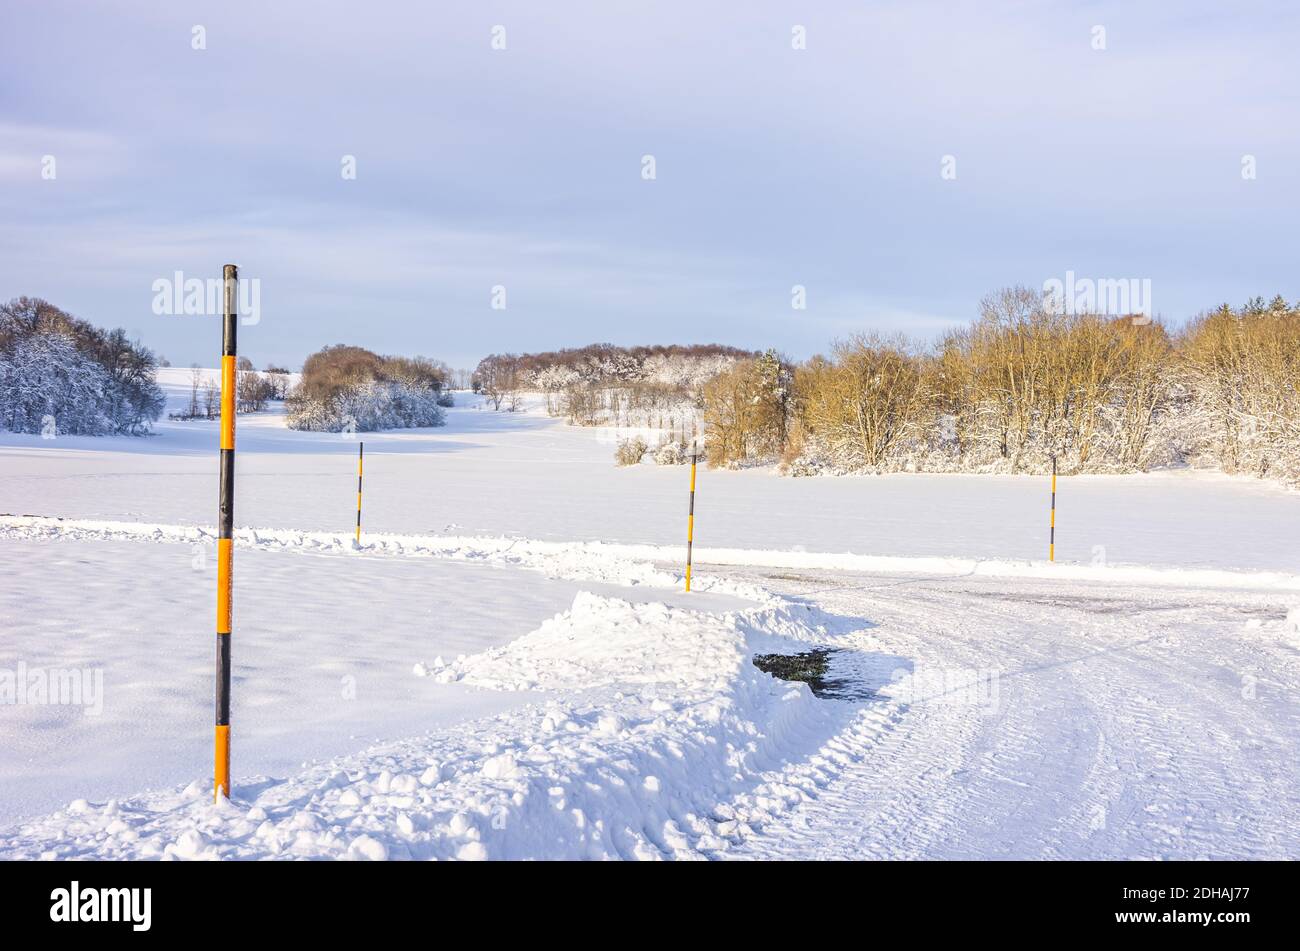 Pali da neve ai margini di una corsia di campagna in un paesaggio invernale. Foto Stock